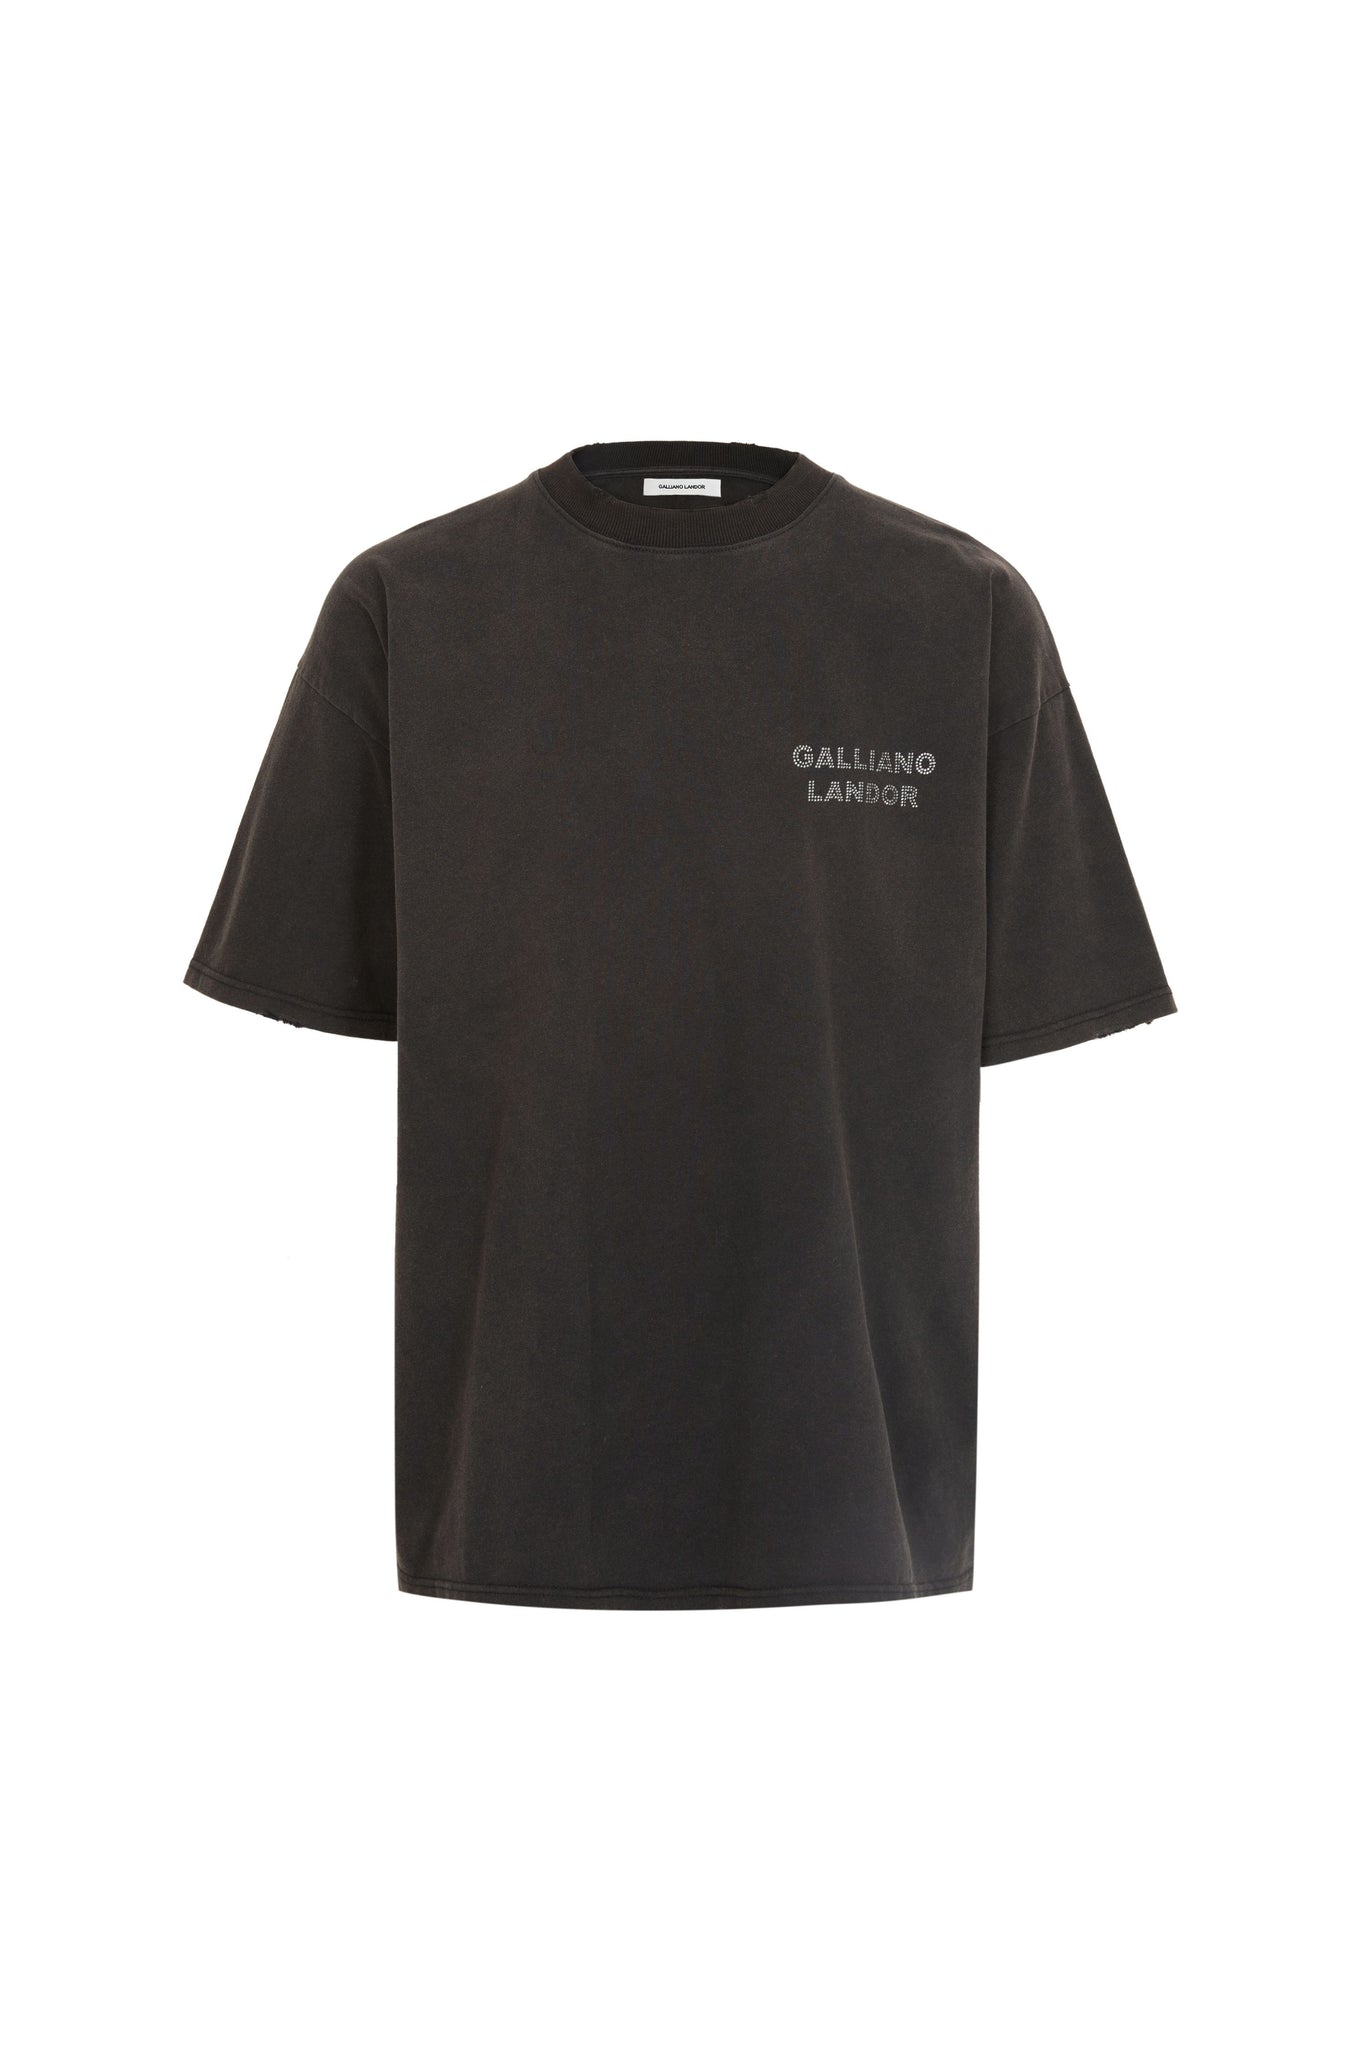 Christian Dior Black Rhinestone Logo T Shirt